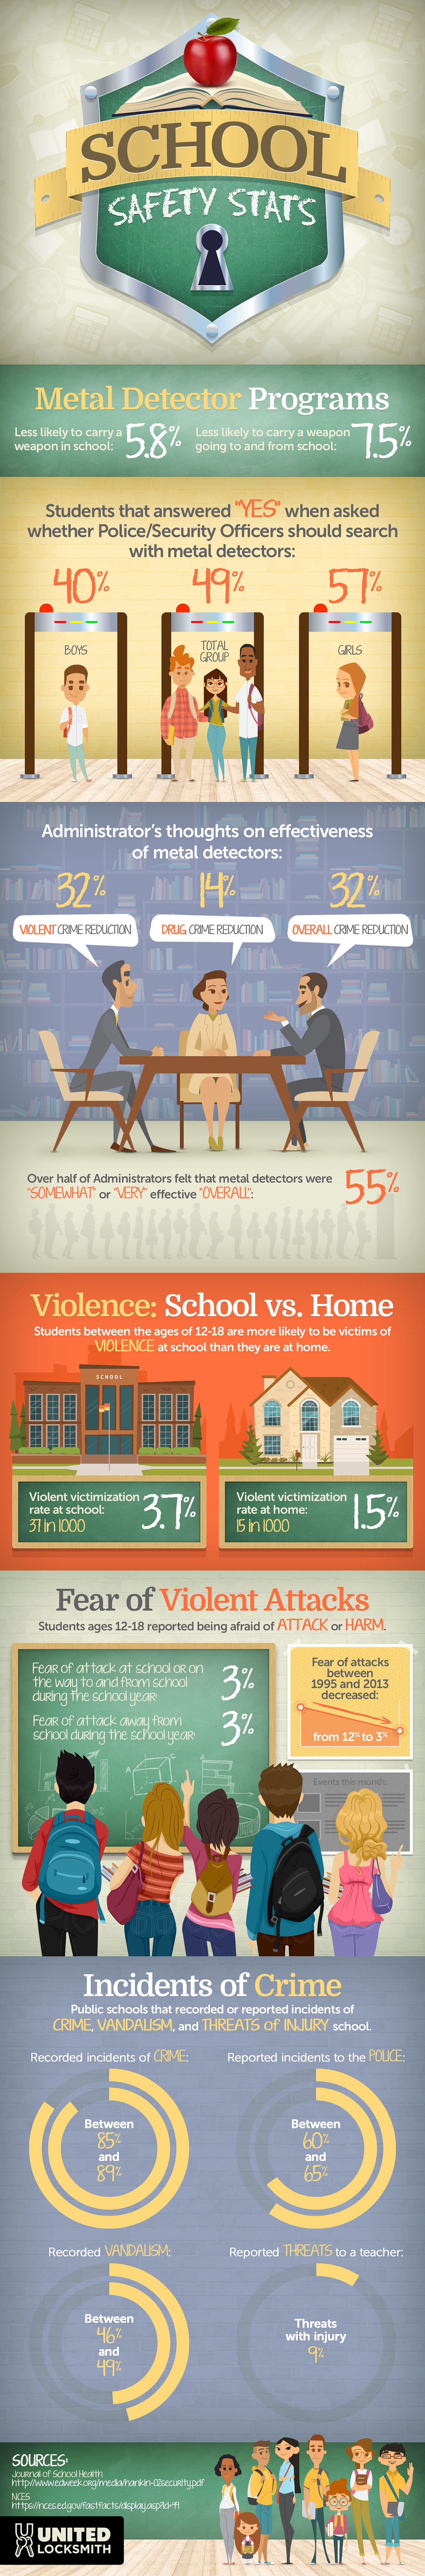 Violence in Schools Statistics Infographic